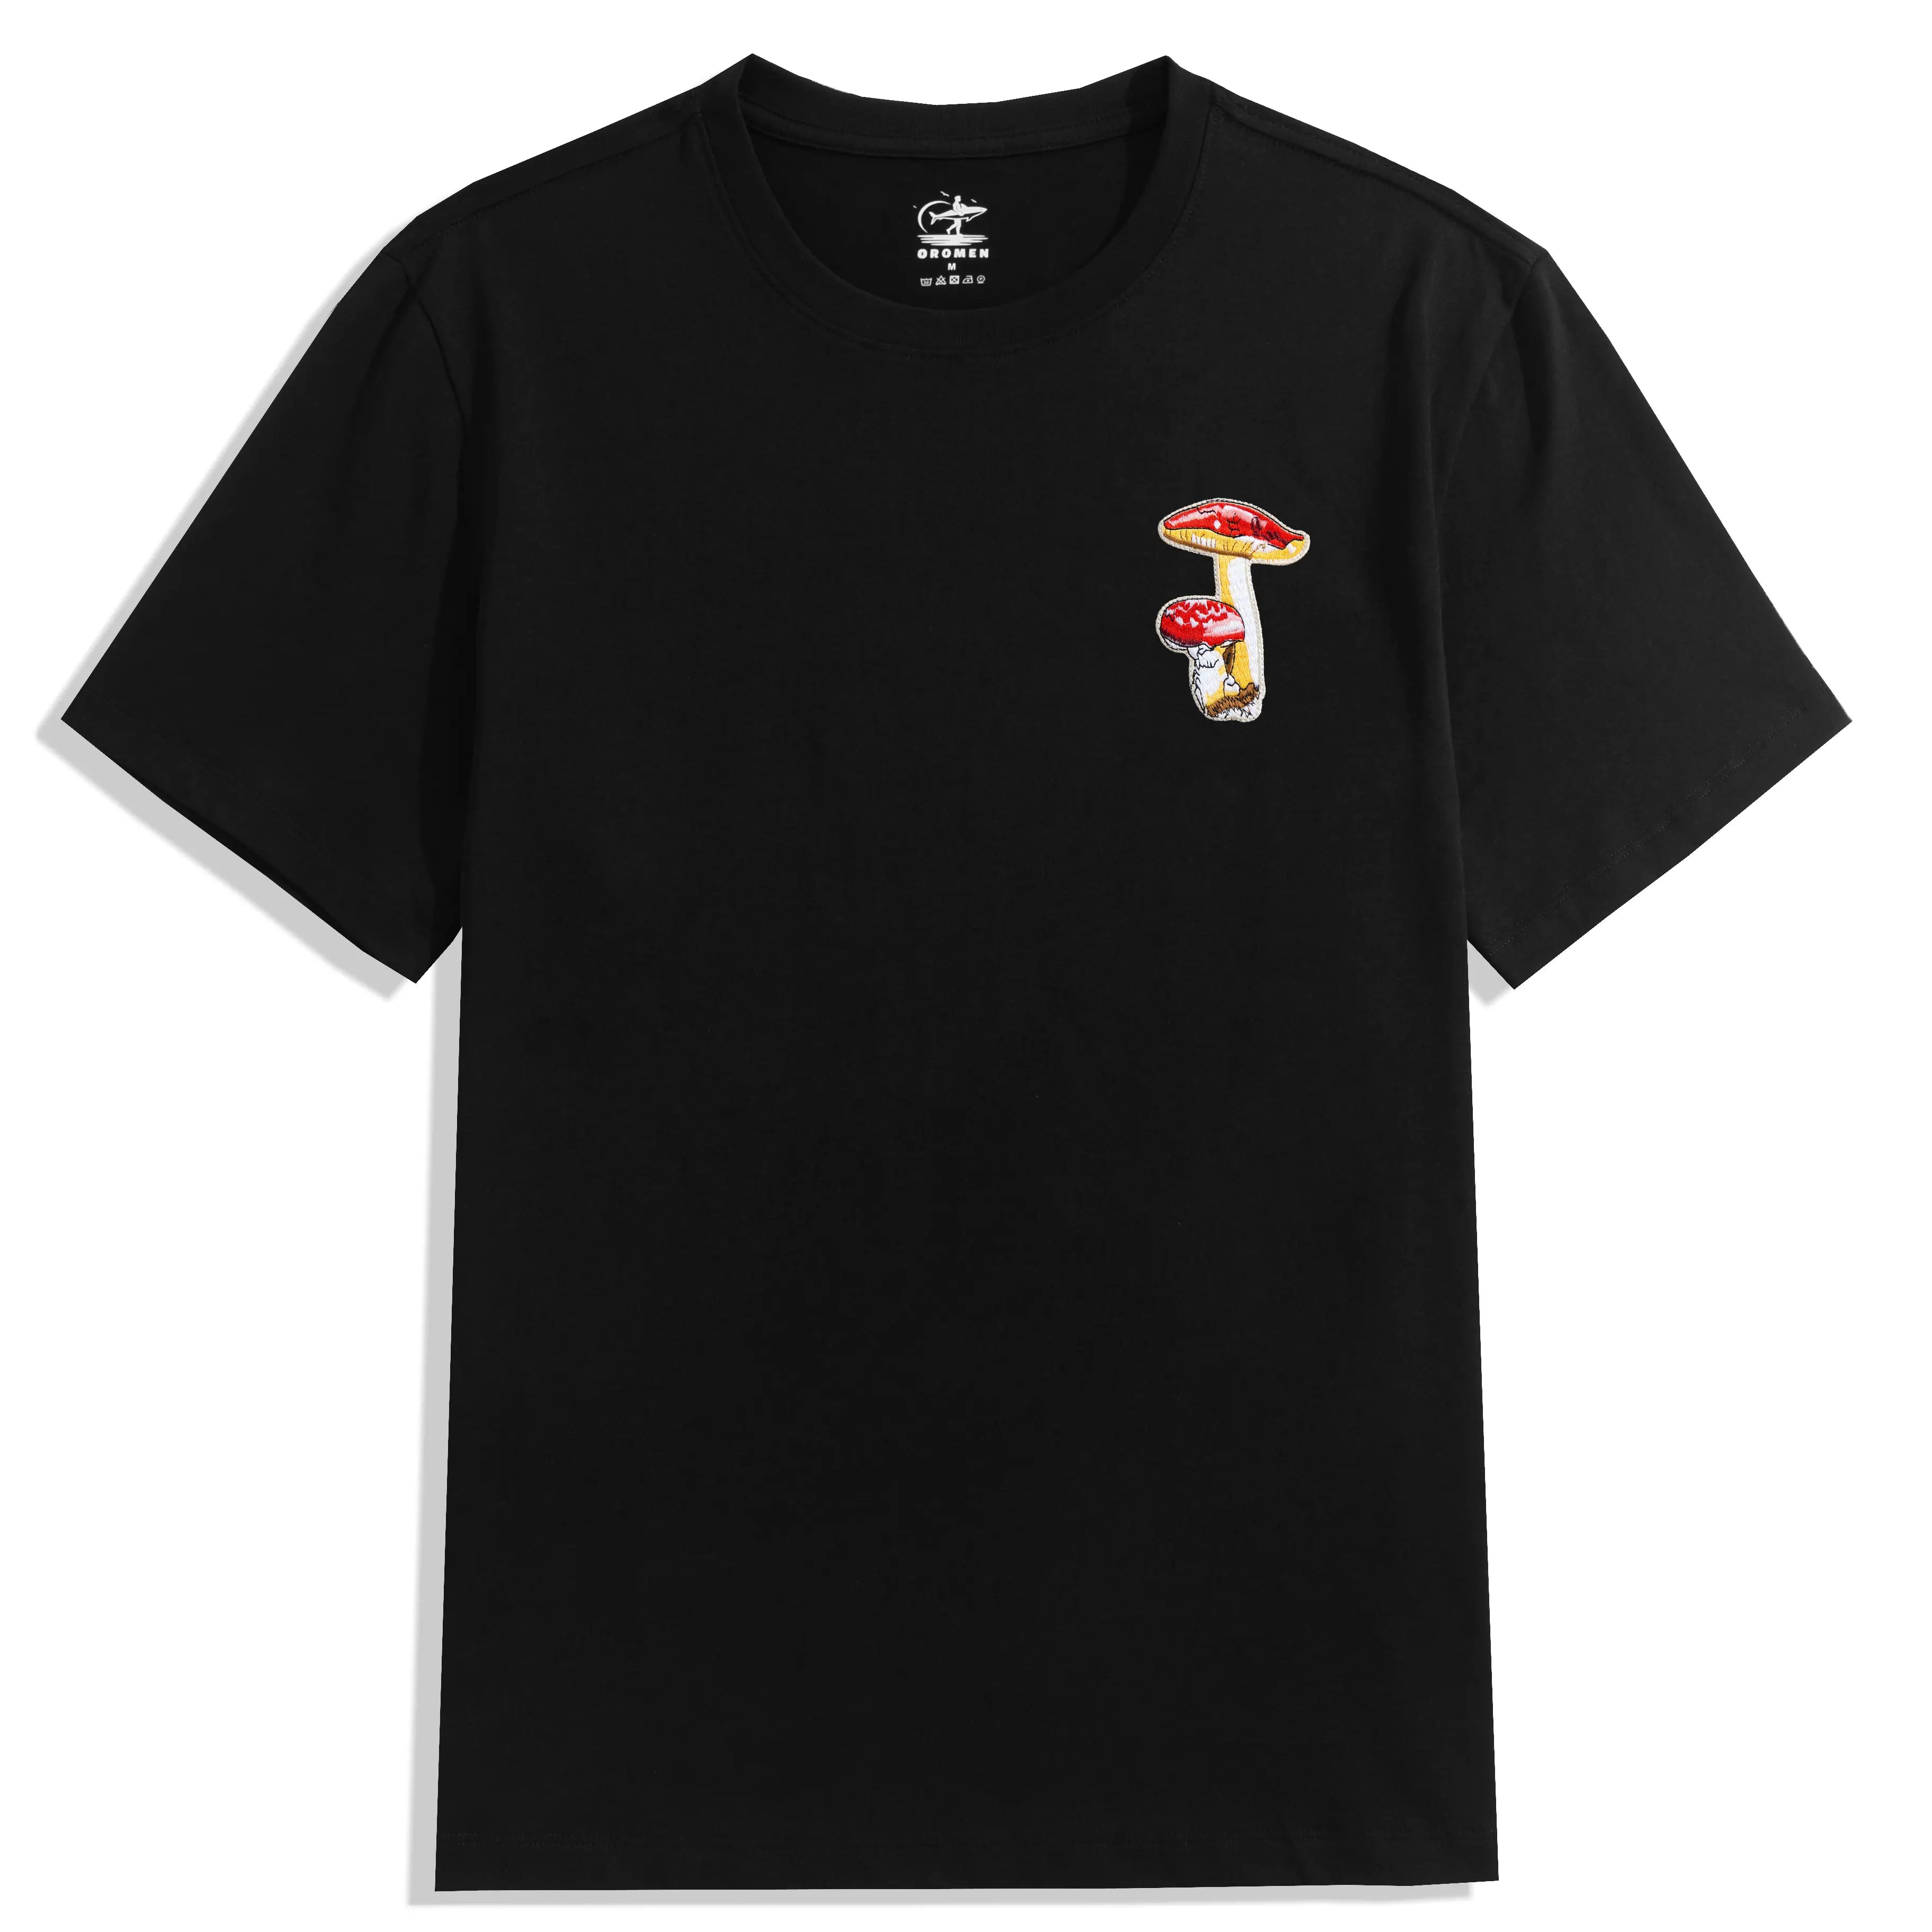 Mushroom Cotton T-shirt Black Color